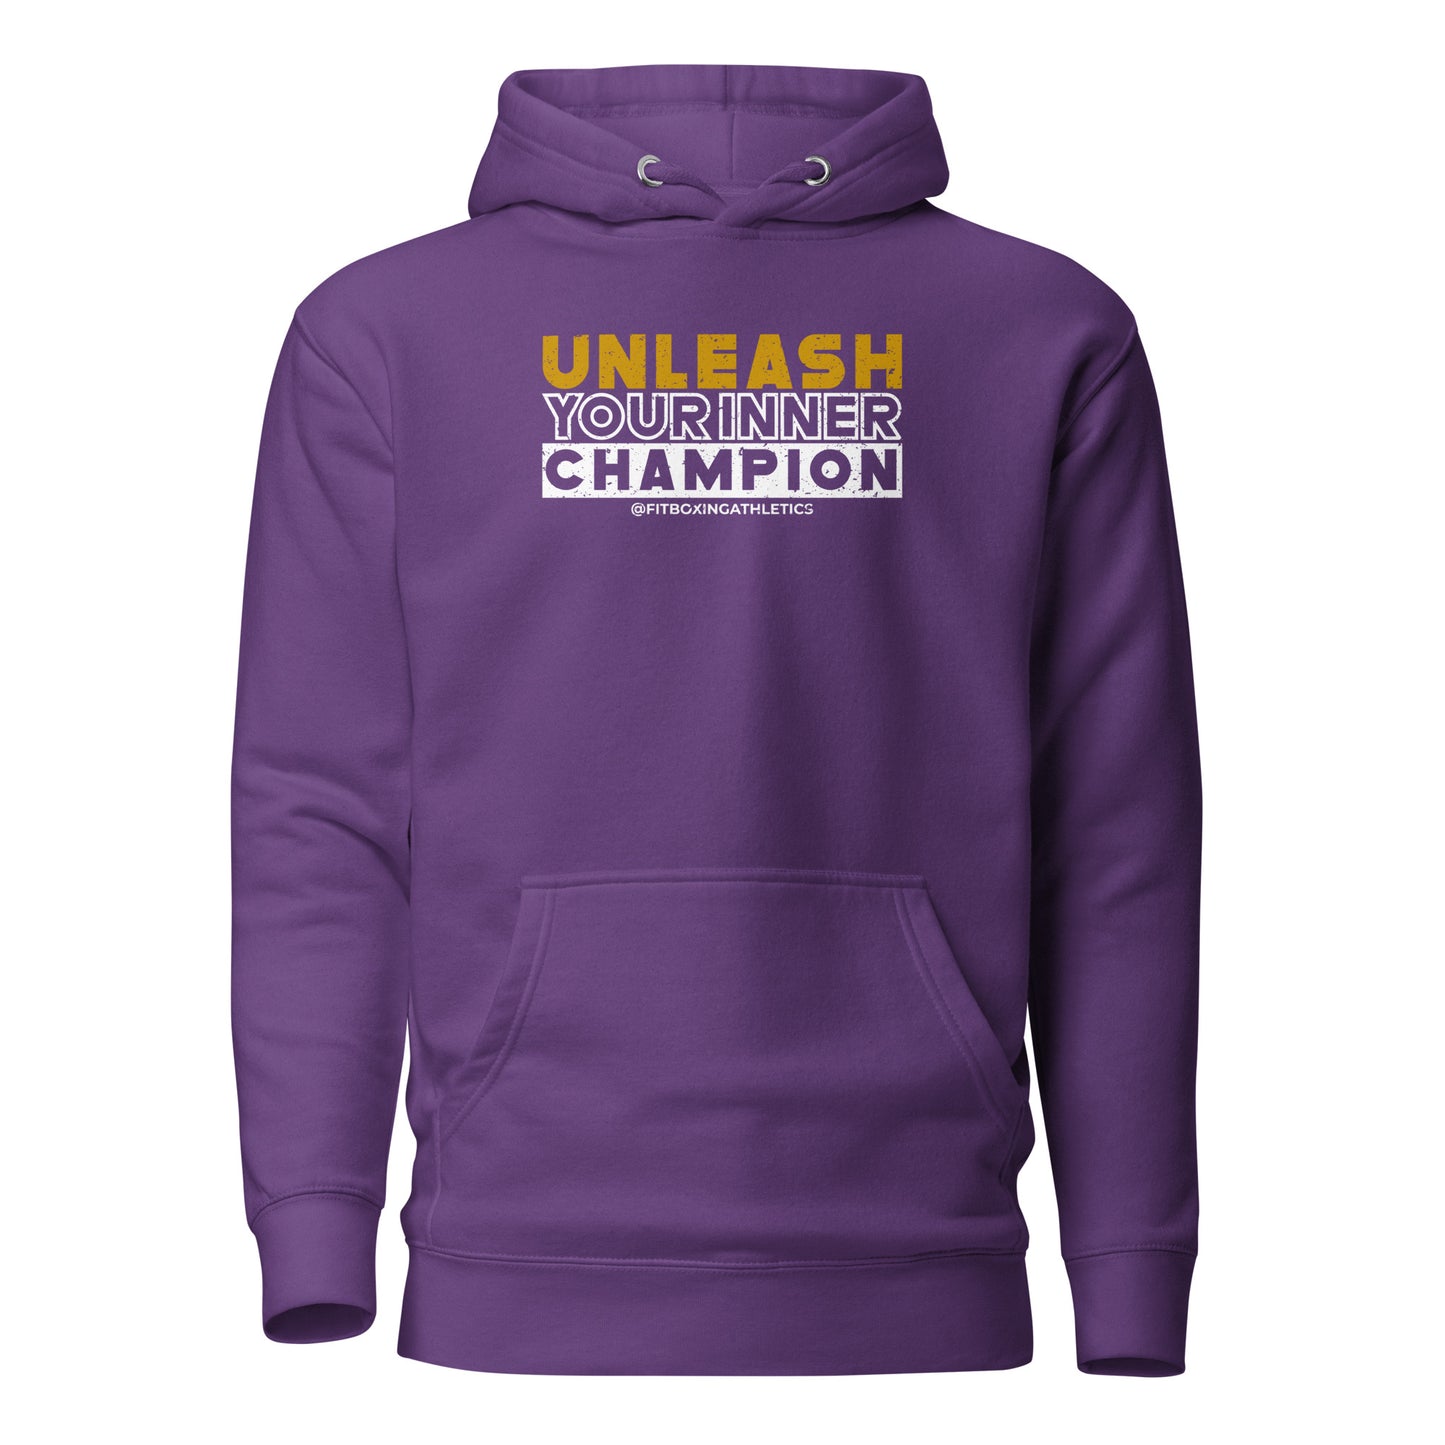 Unleash Your Inner Champion Hoodie (White Logo)